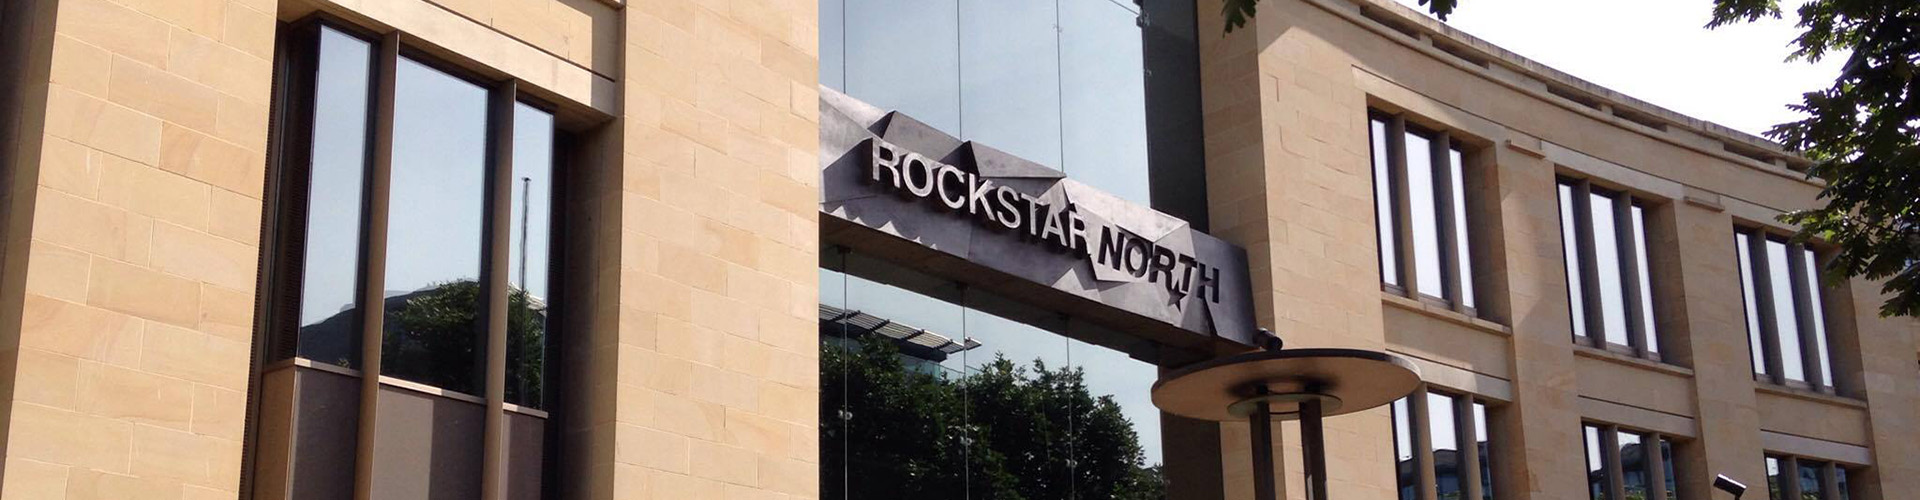 Was walking in Edinburgh and came across Rockstar North HQ. : r/rockstar